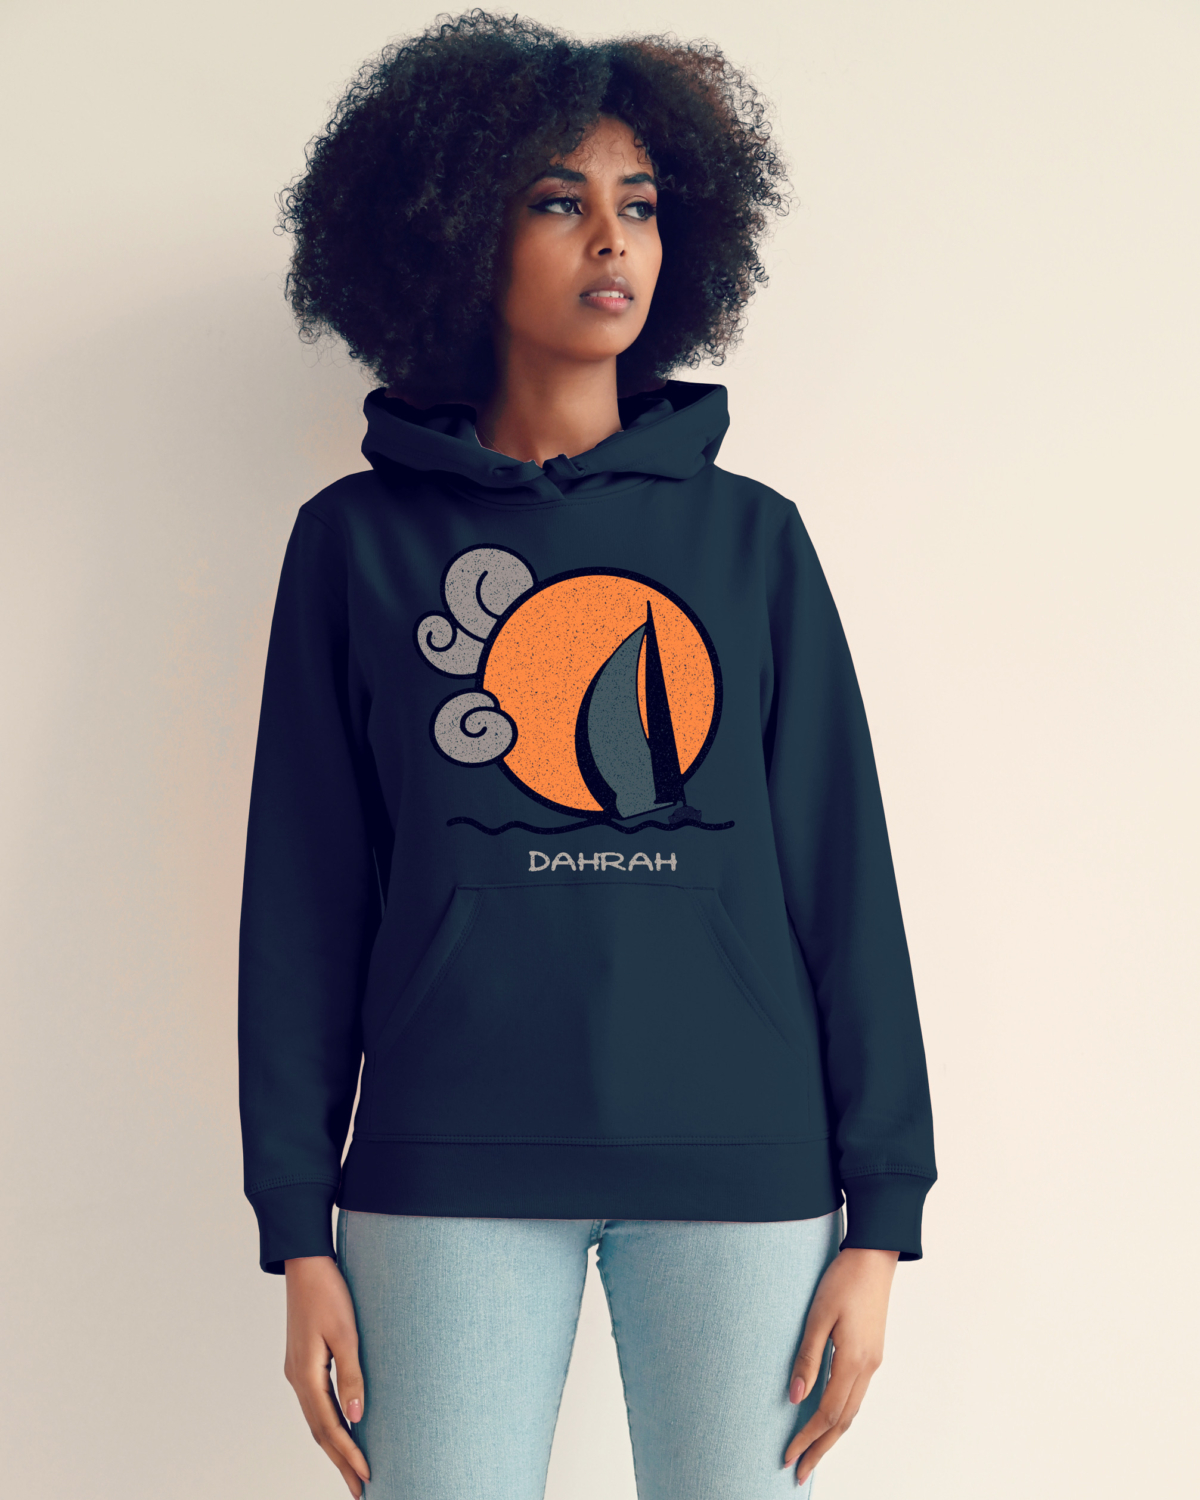 Organic hoodie with print of a SAILBOAT by Dahrah Darah Fashion.